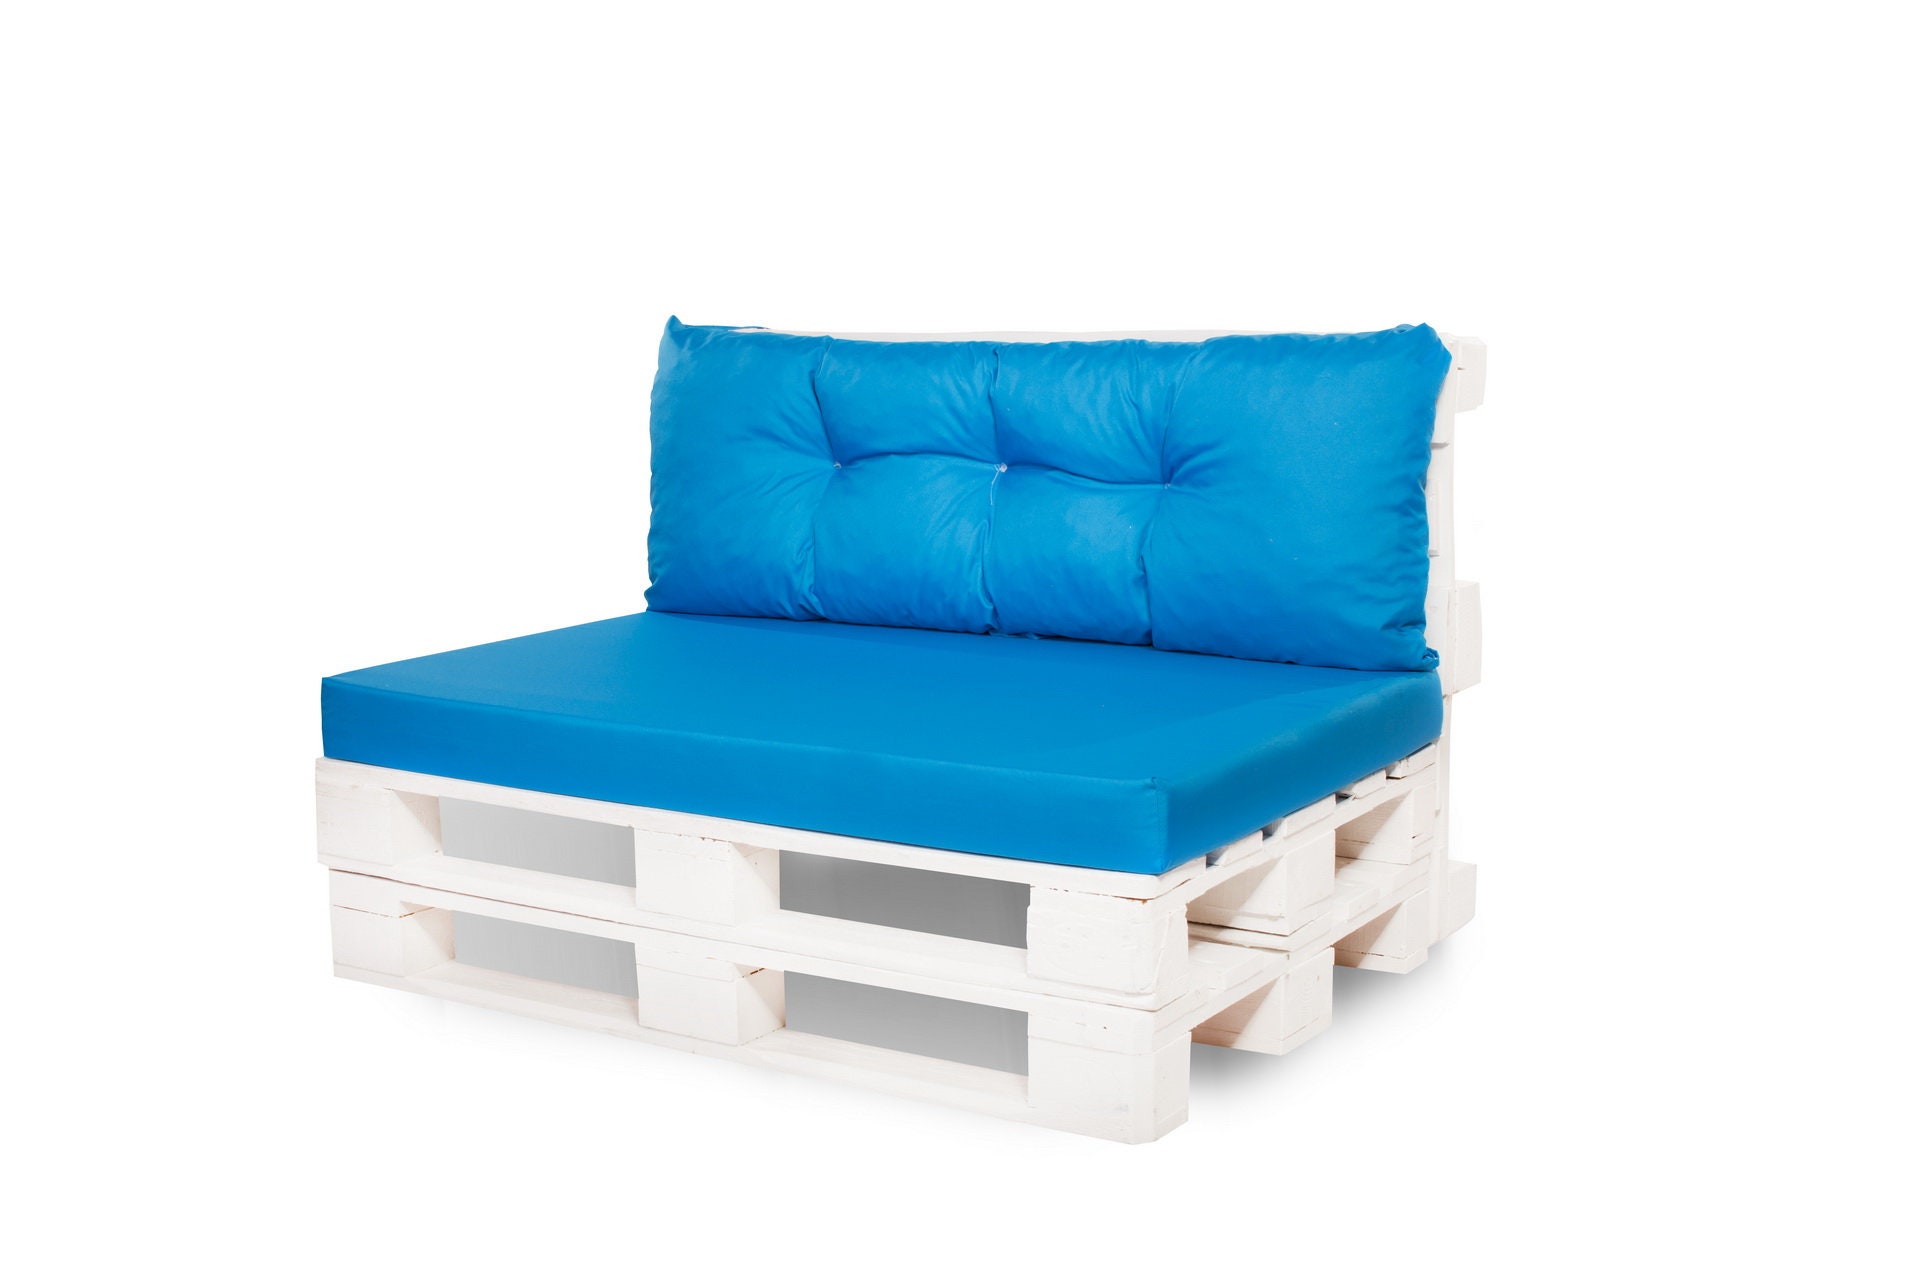 Euro Pallet Bench Cushions Waterproof Palette Cushion Garden Furniture Seat Pad